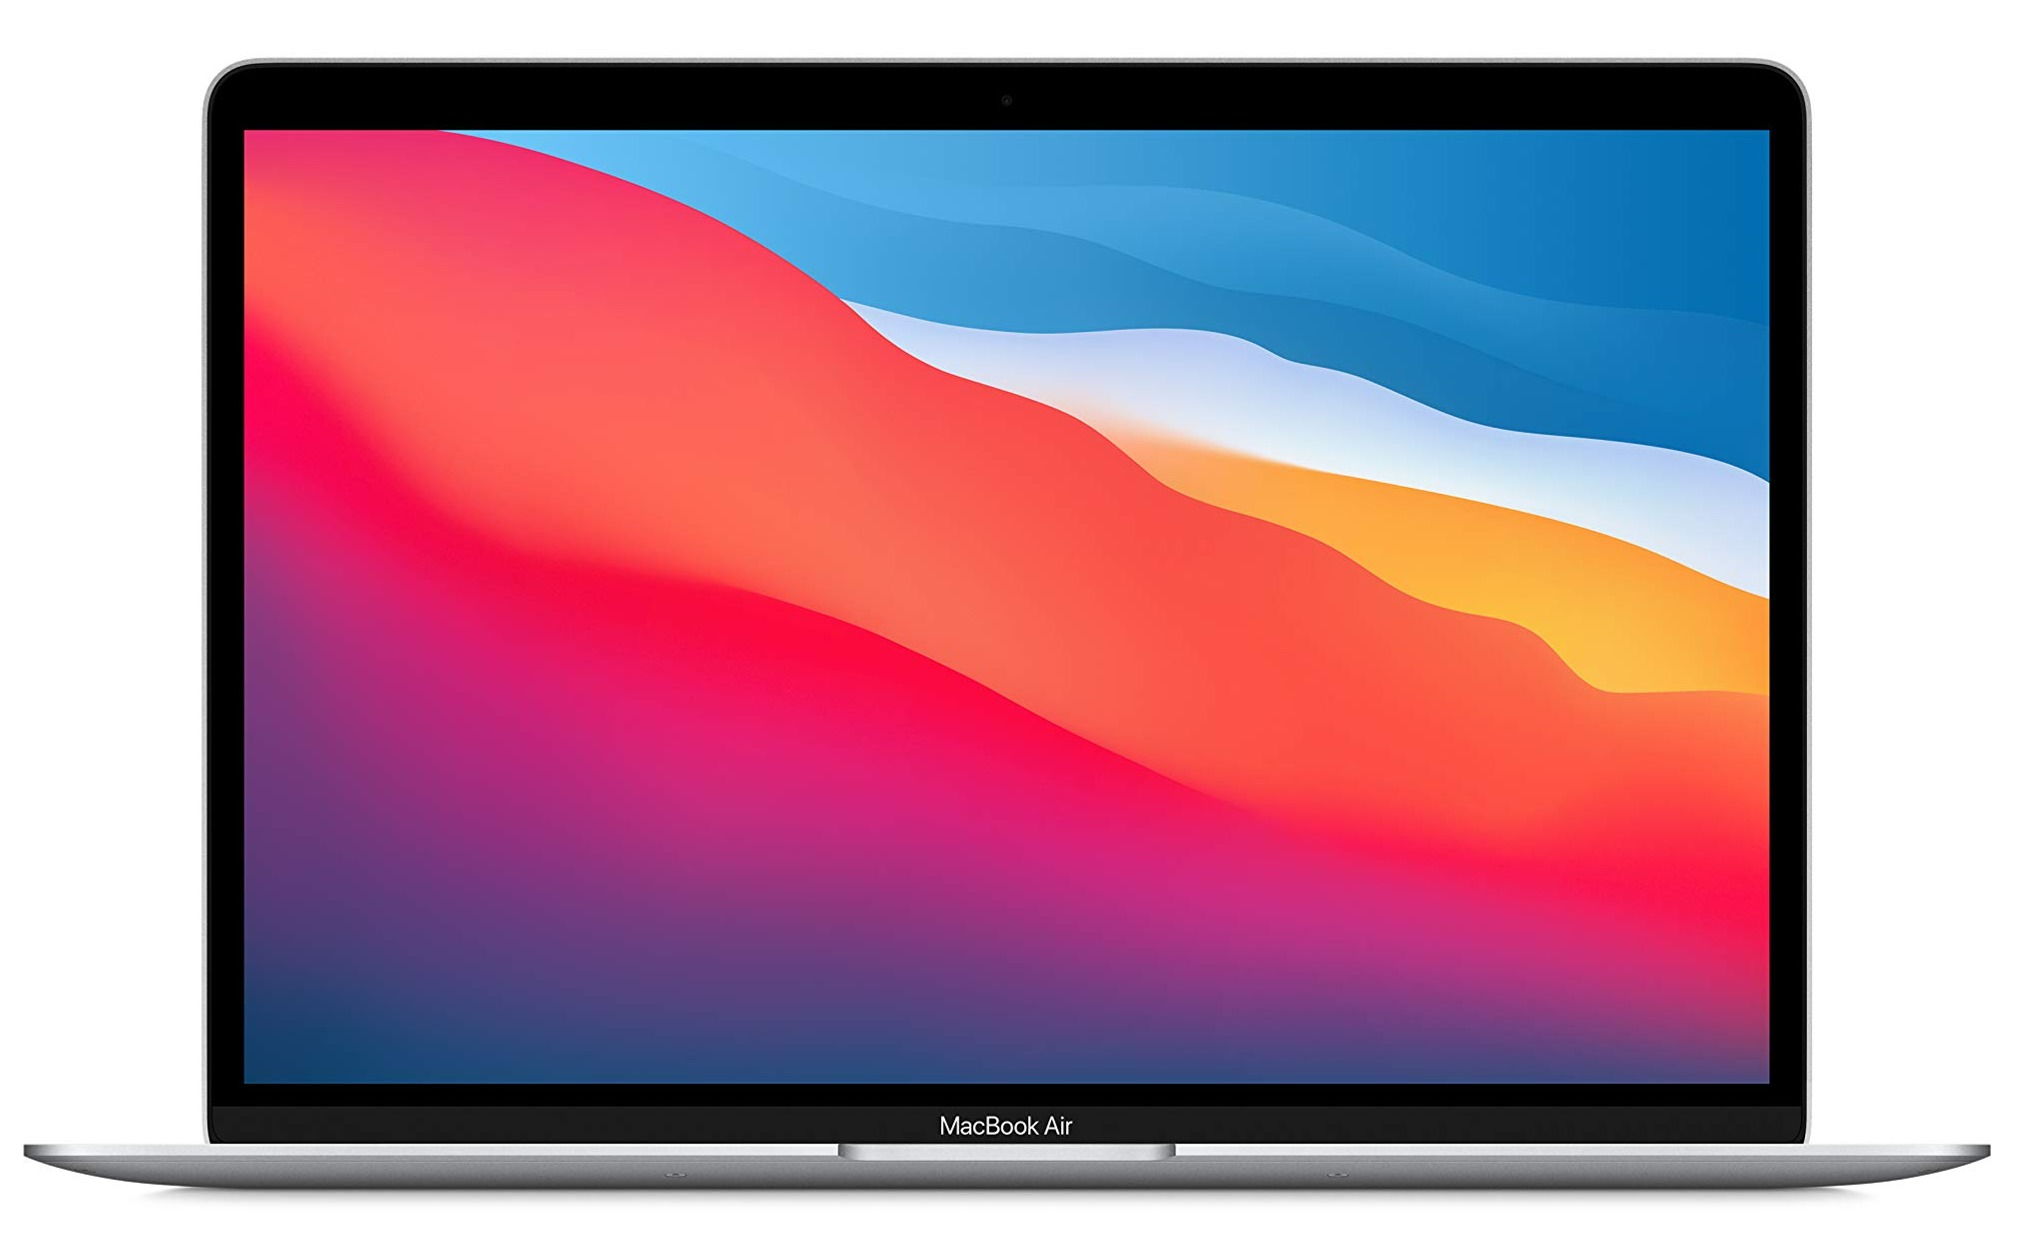 Amazon.com $749.99: MacBook Air 13.3" Laptop: 2560x1600, M1 Chip, 8GB RAM, 256GB SSD After $149.01 coupon clip